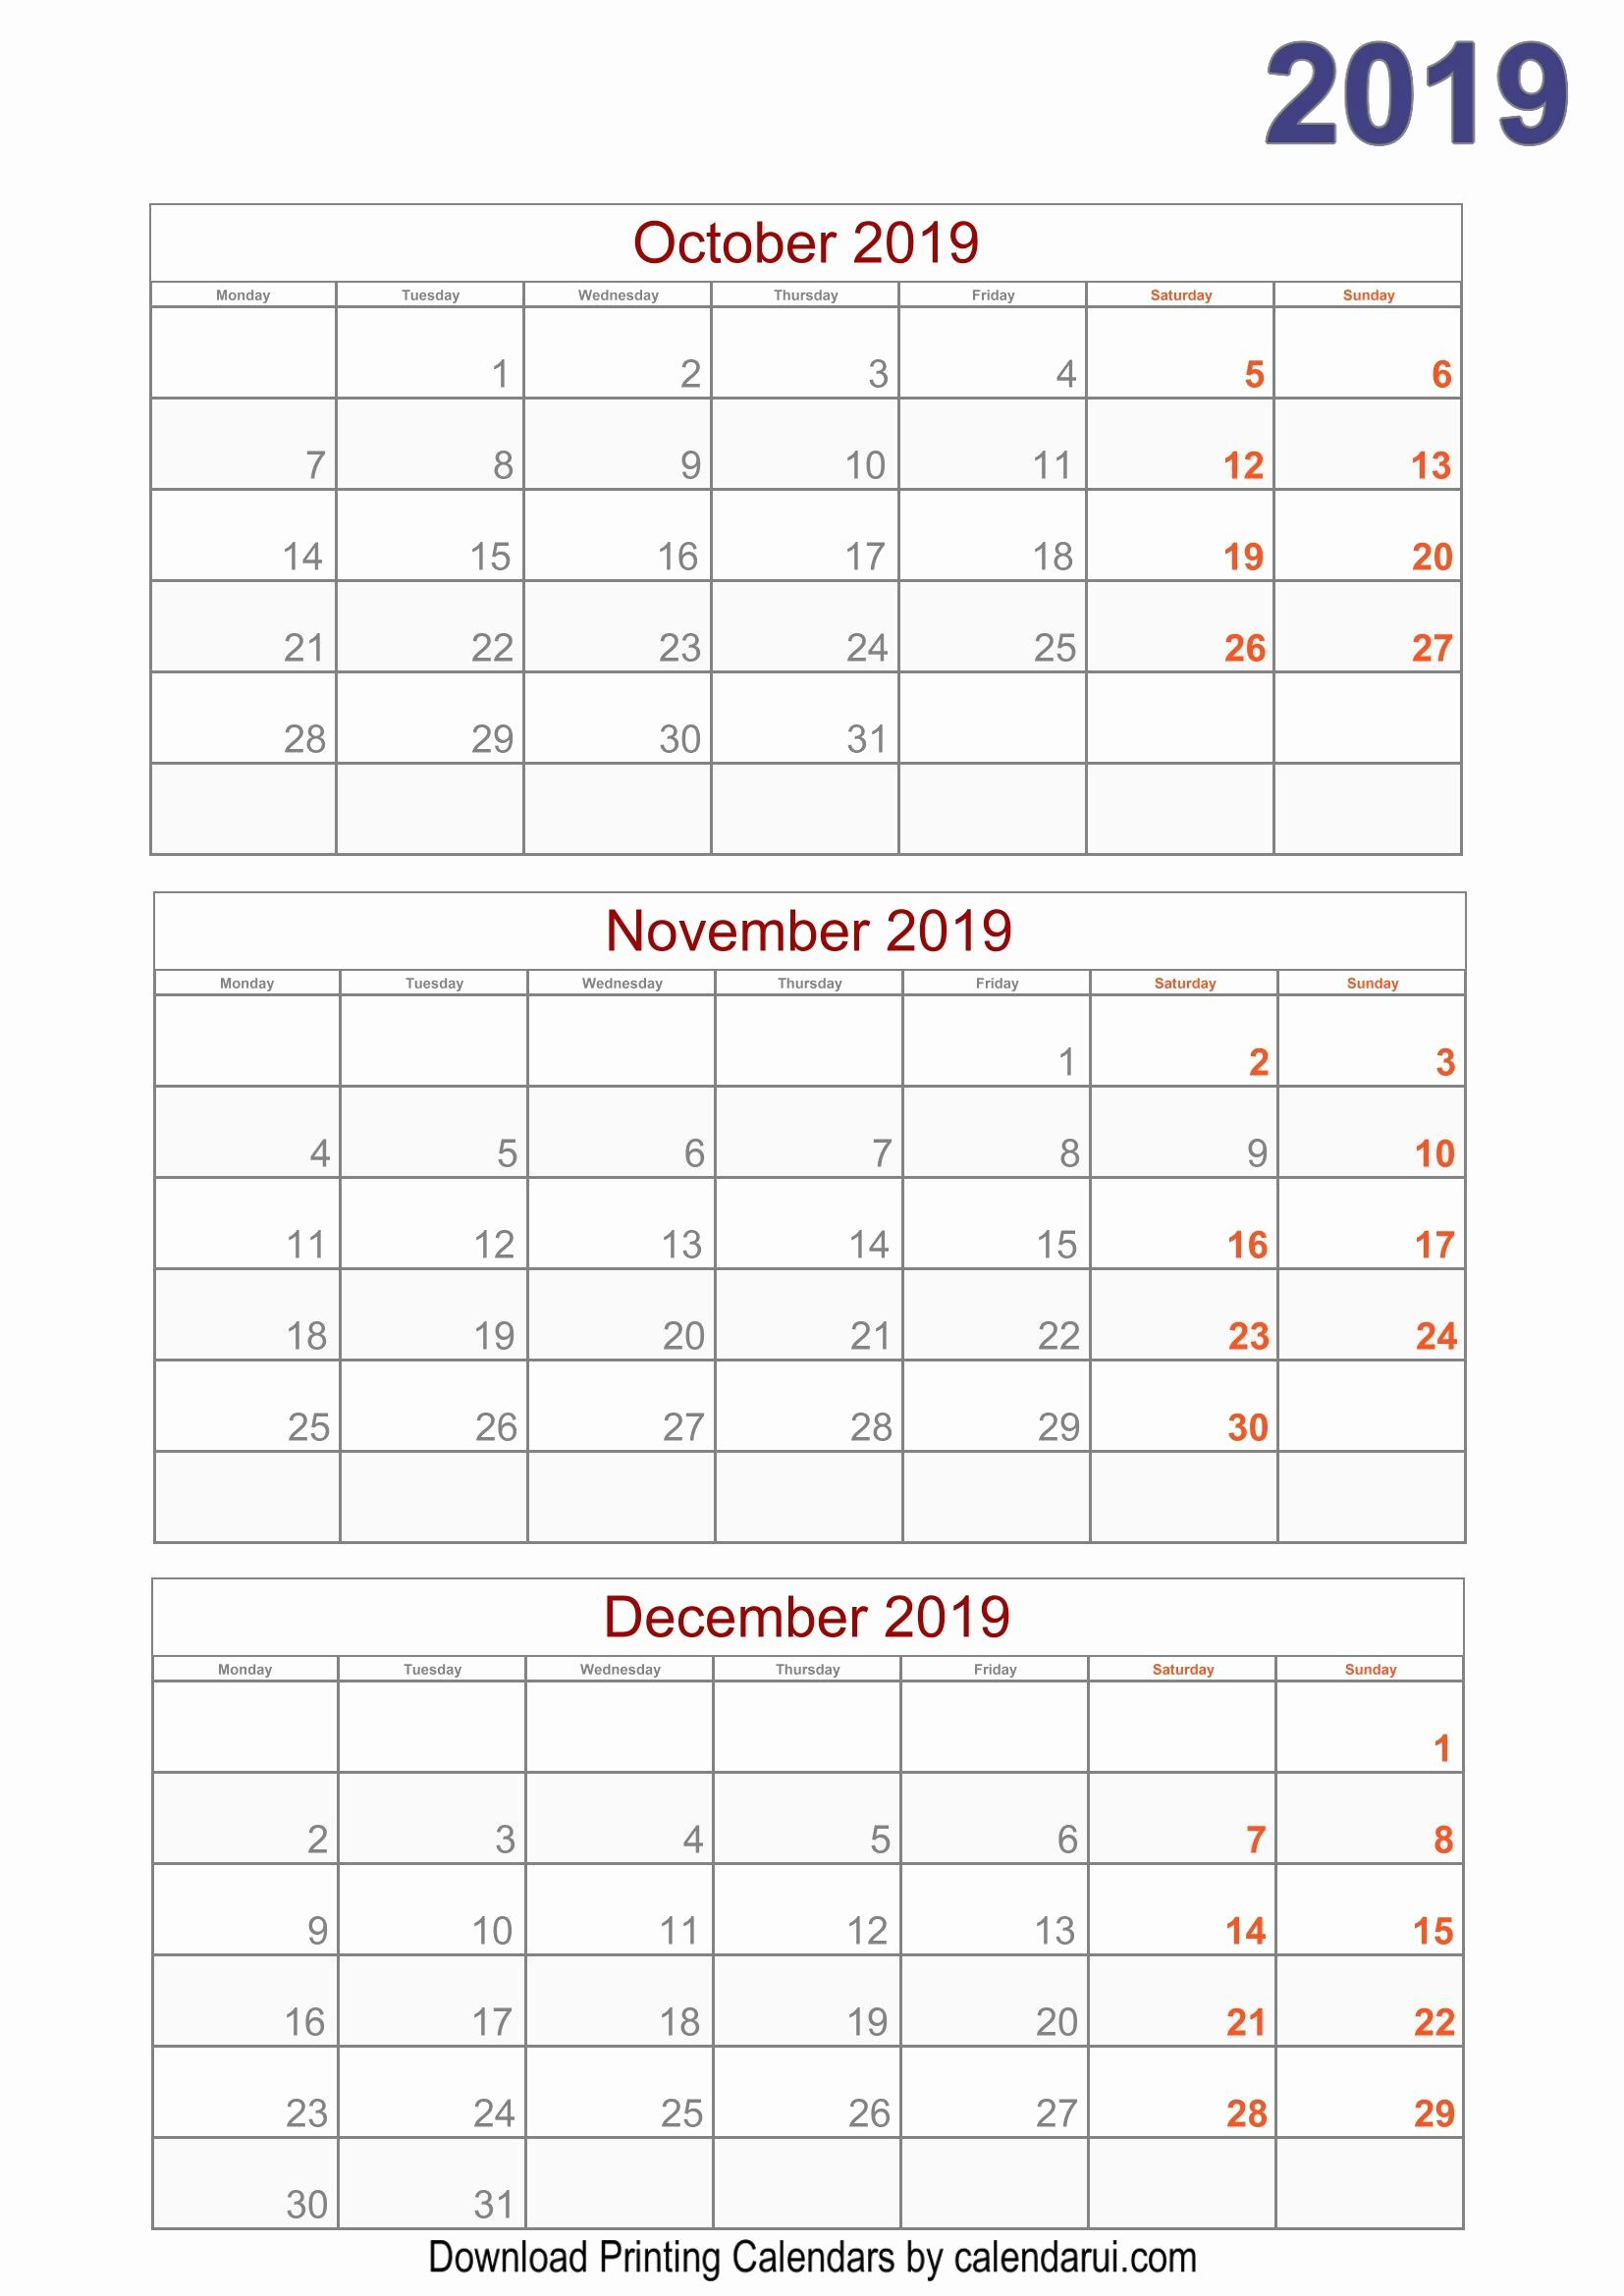 Printable Calendar I Can Type On In 2020 | Free Calendar